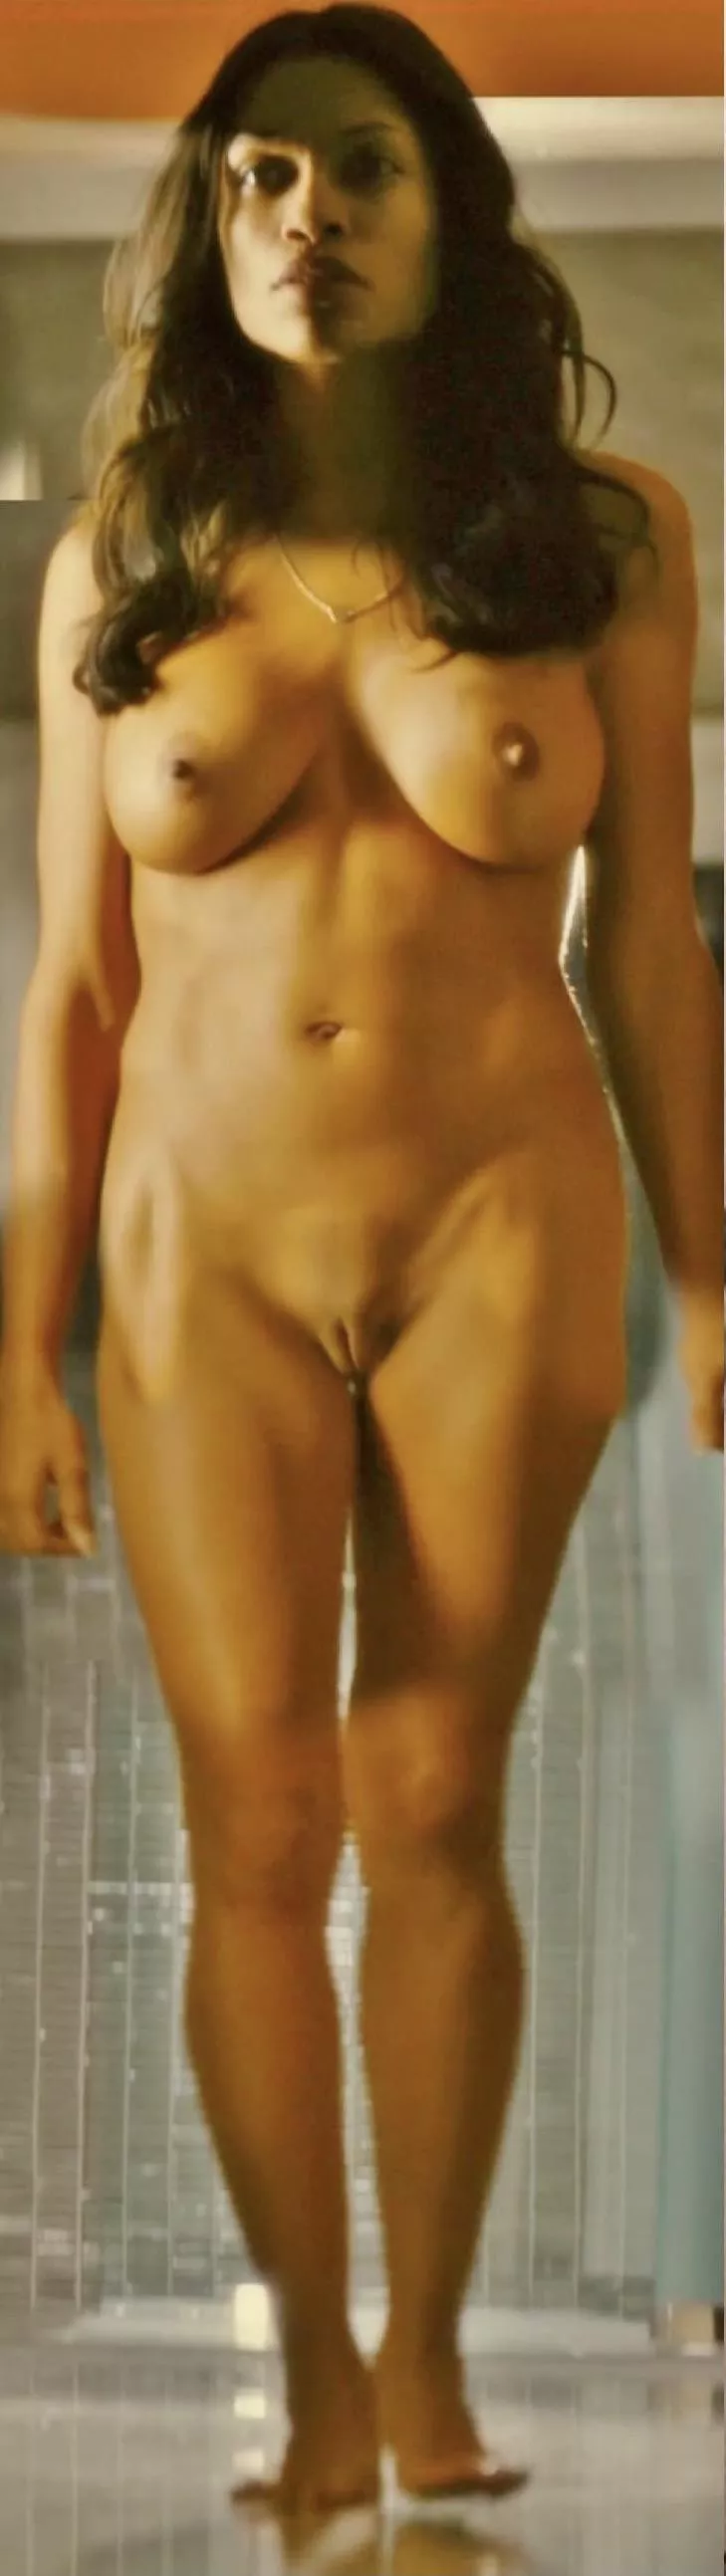 Actress Rosario Dawson Nude